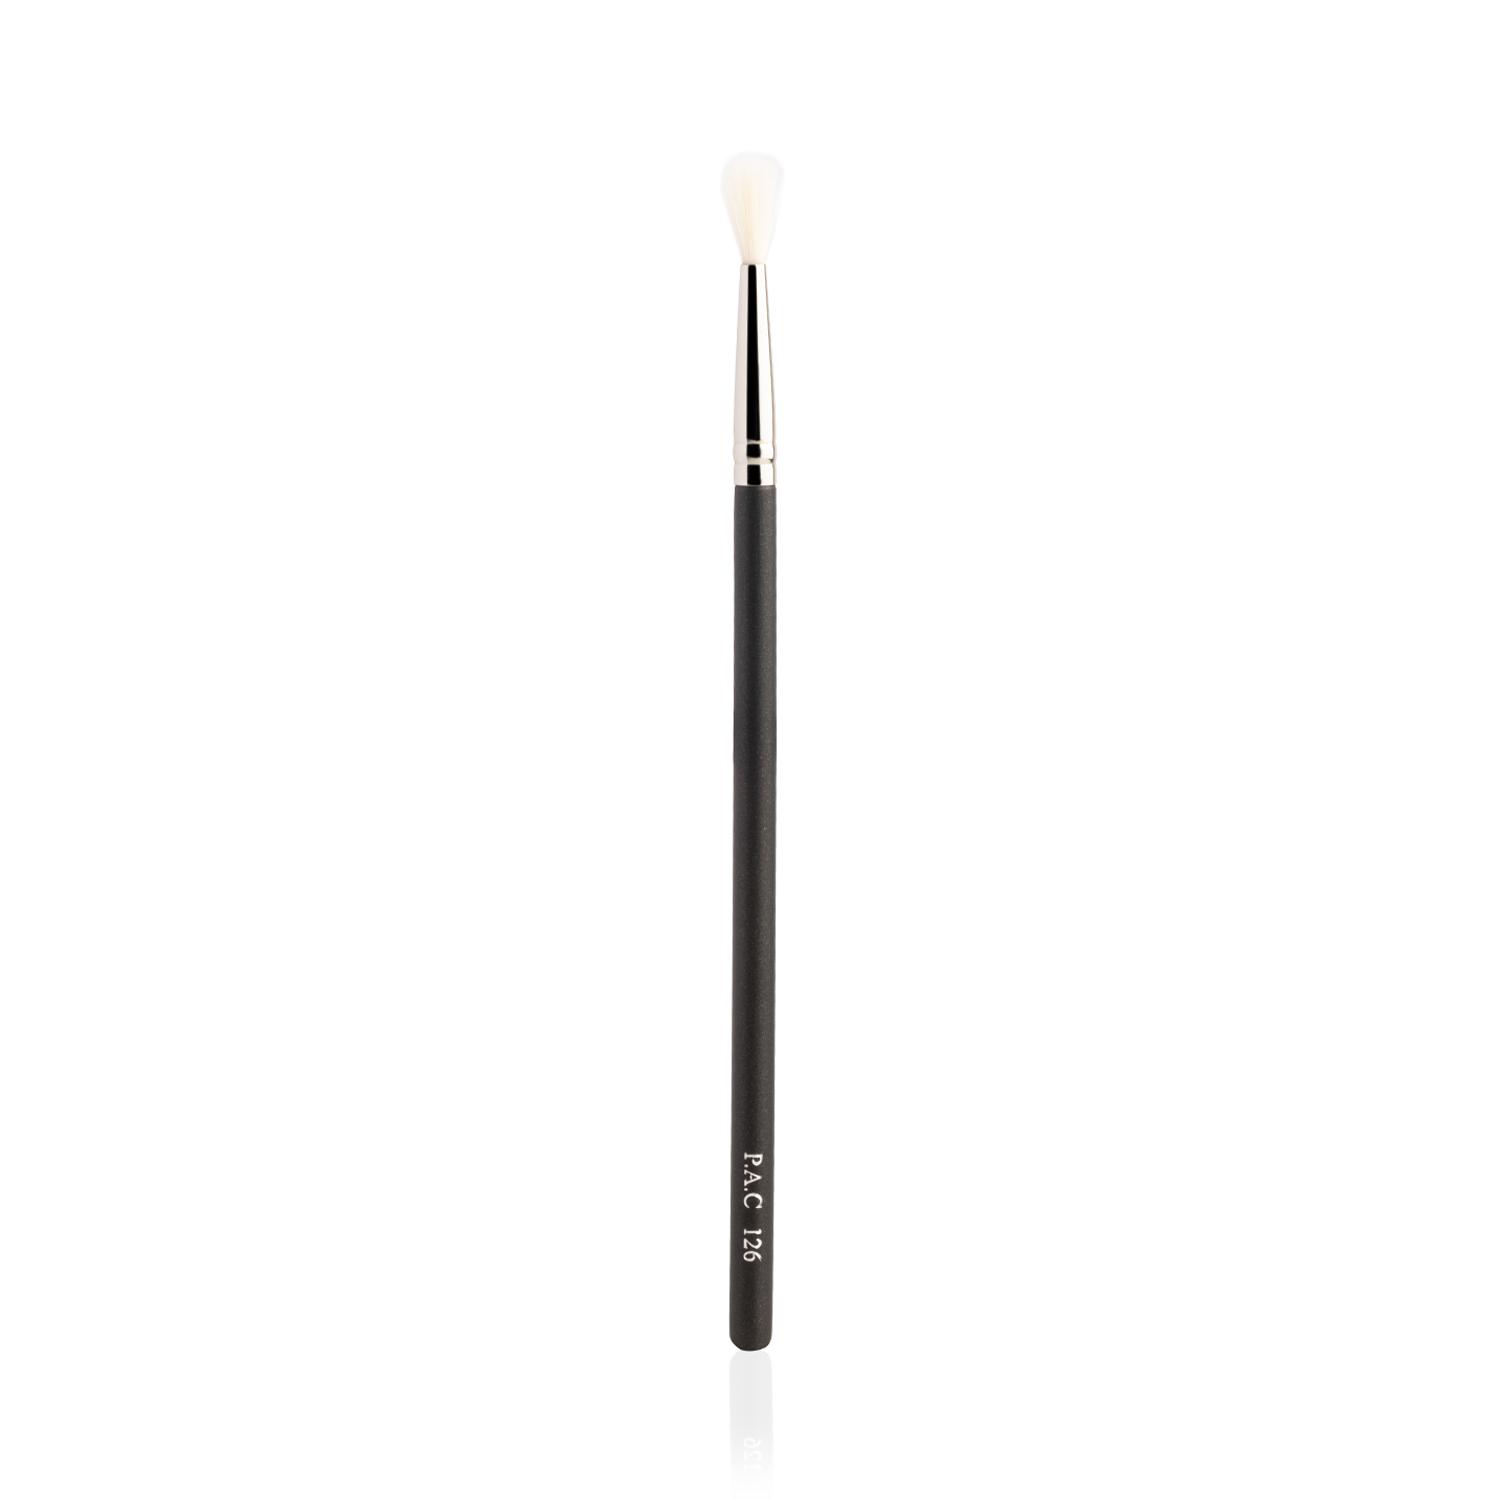 PAC | PAC Eyeshadow Blending Brush - 126 (1Pc)